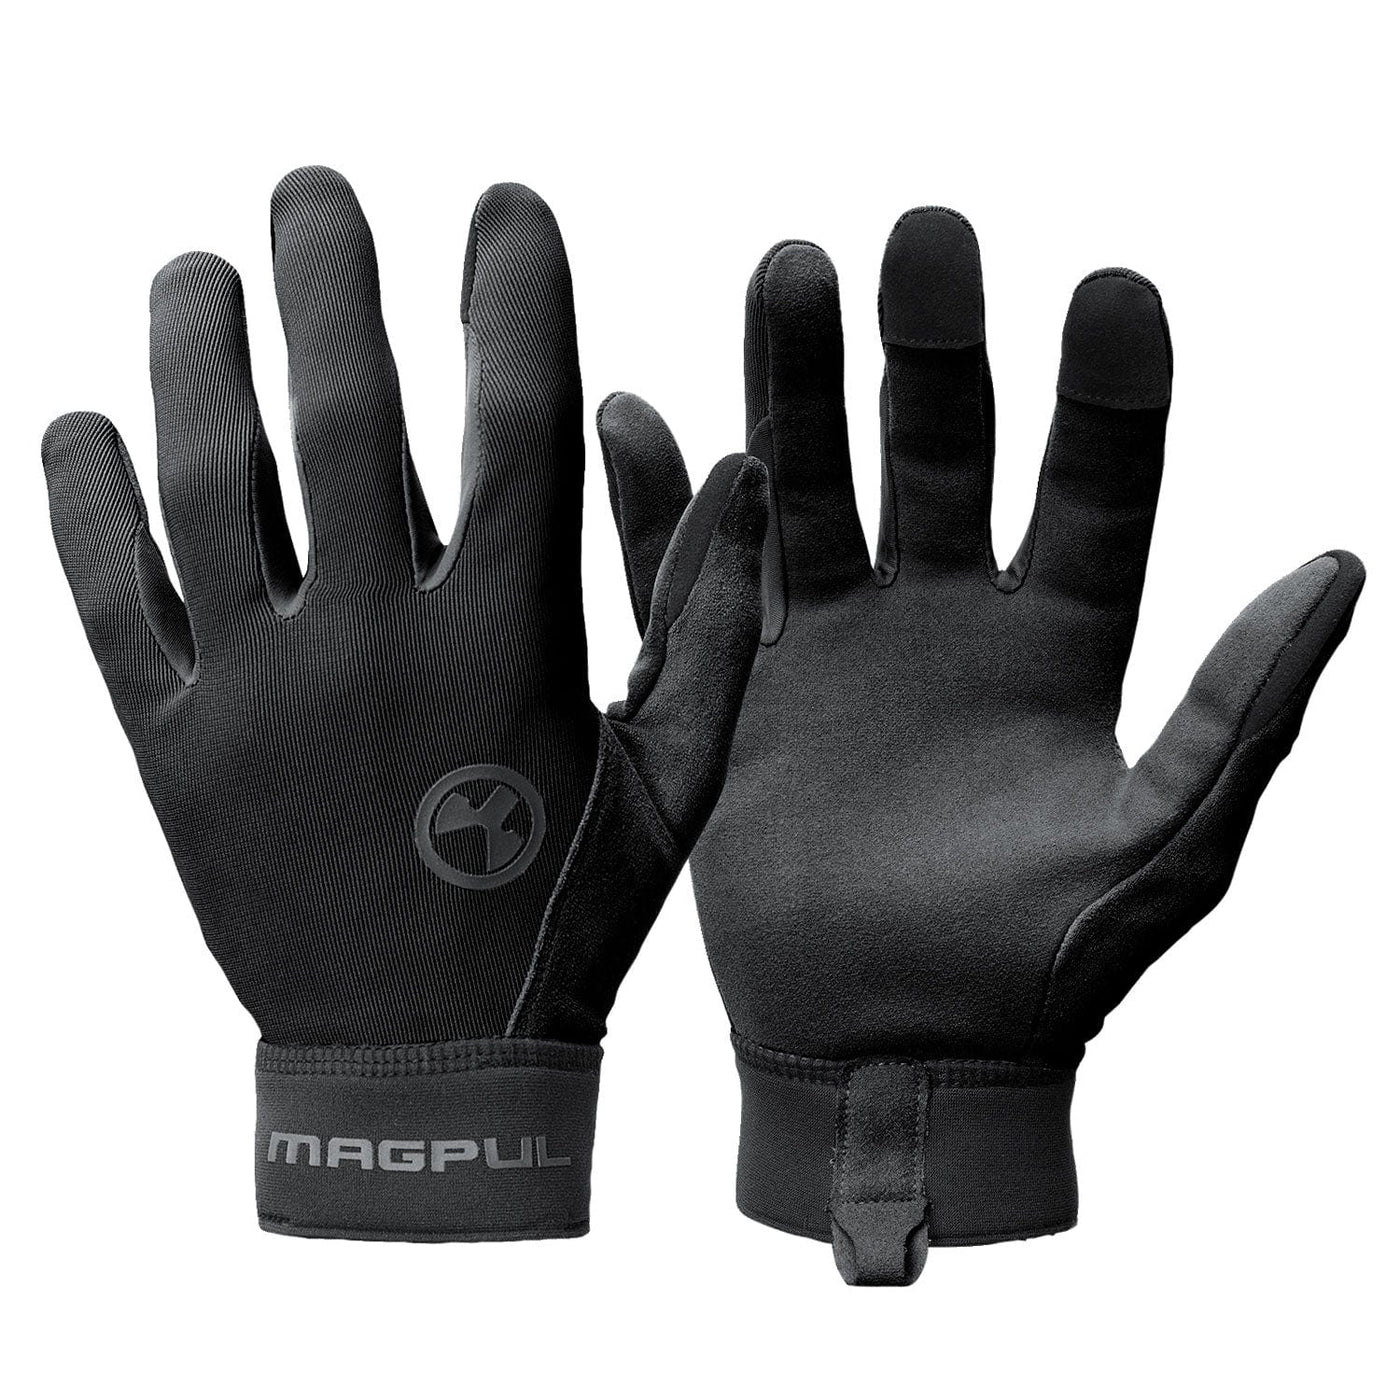 MAGPUL INDUSTRIES CORP Magpul Industries Corp Technical Glove, Magpul Mag1014-001 Technical Glove 2.0   Xl   Blk Accessories